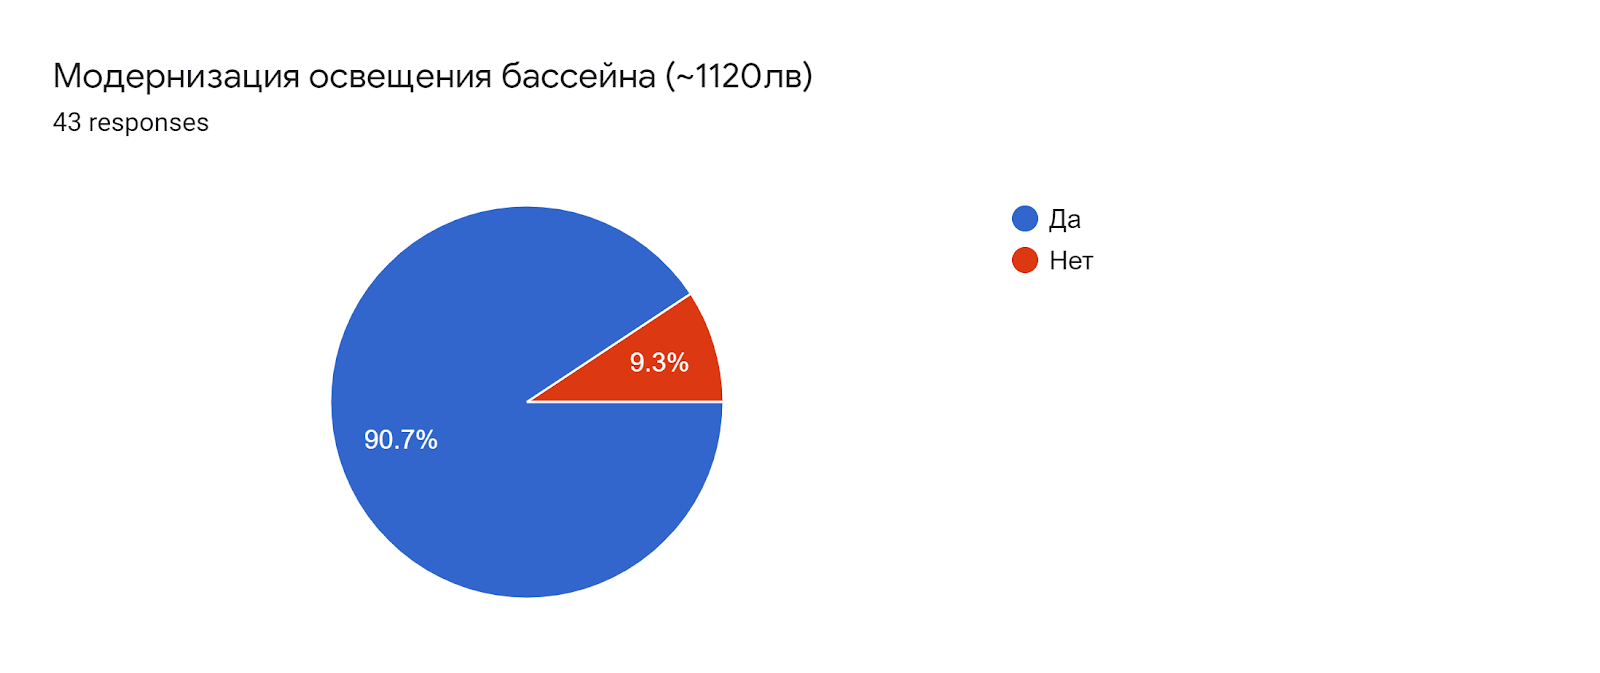 Forms response chart. Question title: Модернизация освещения бассейна (~1120лв). Number of responses: 43 responses.